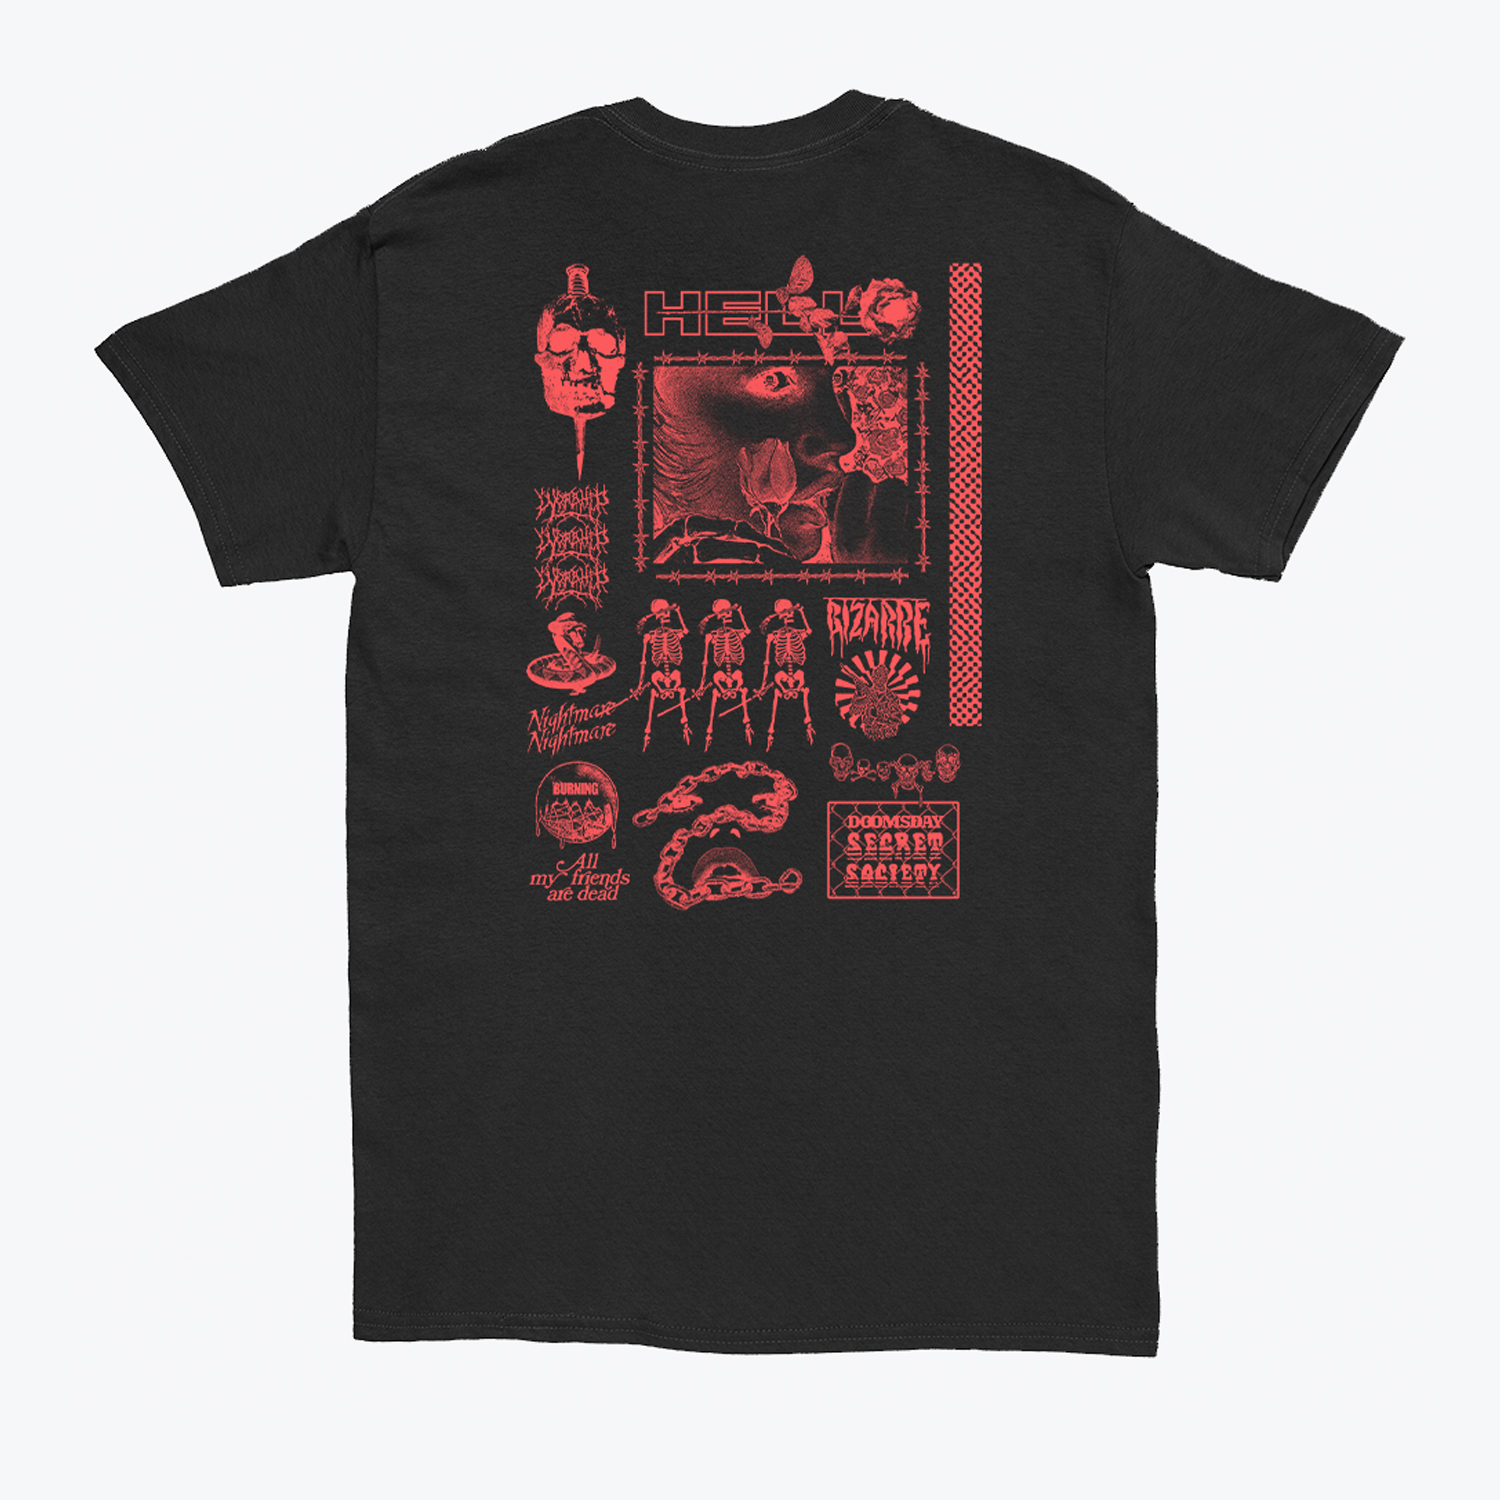 Jimbo Bones' 'All My Friends Are Dead' T-shirt